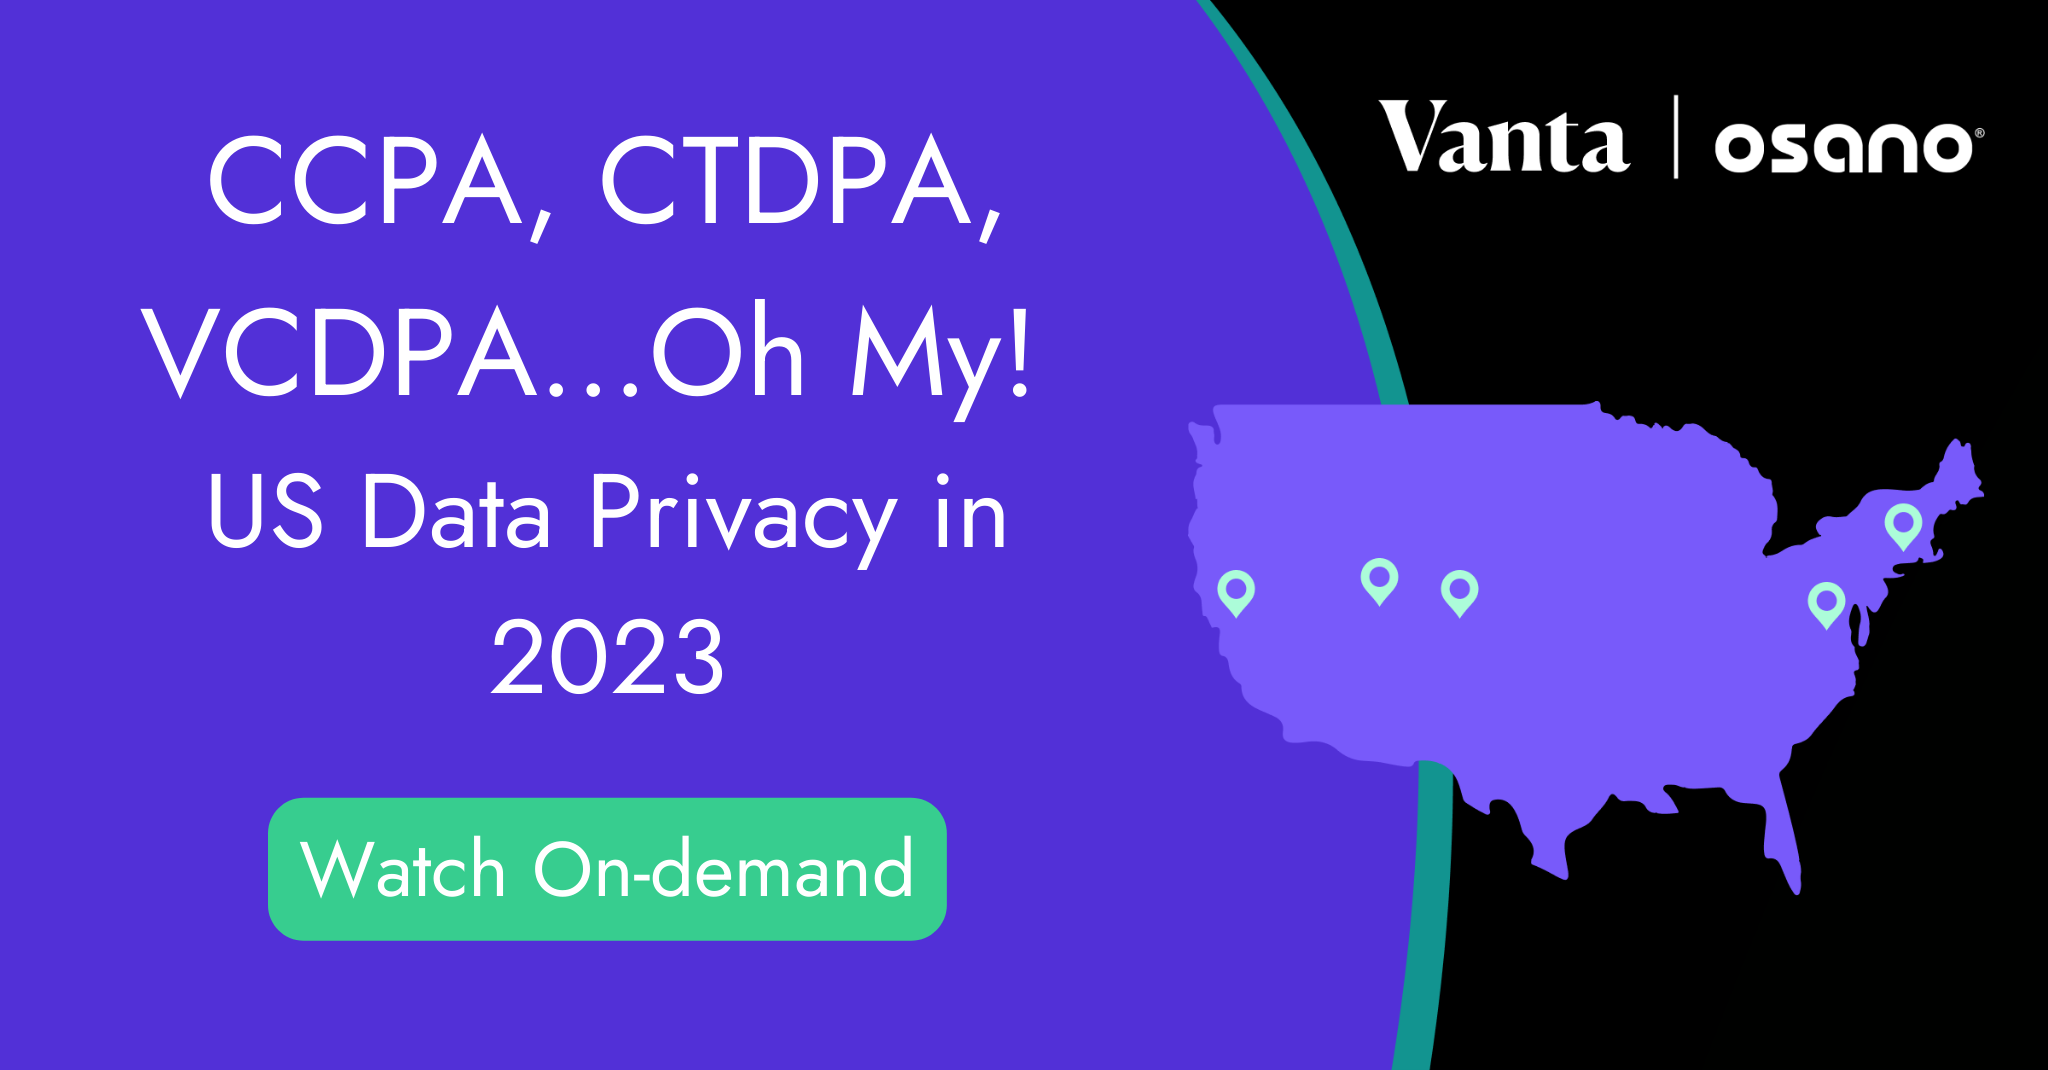 Vanta + Osano Data Privacy Laws 2023